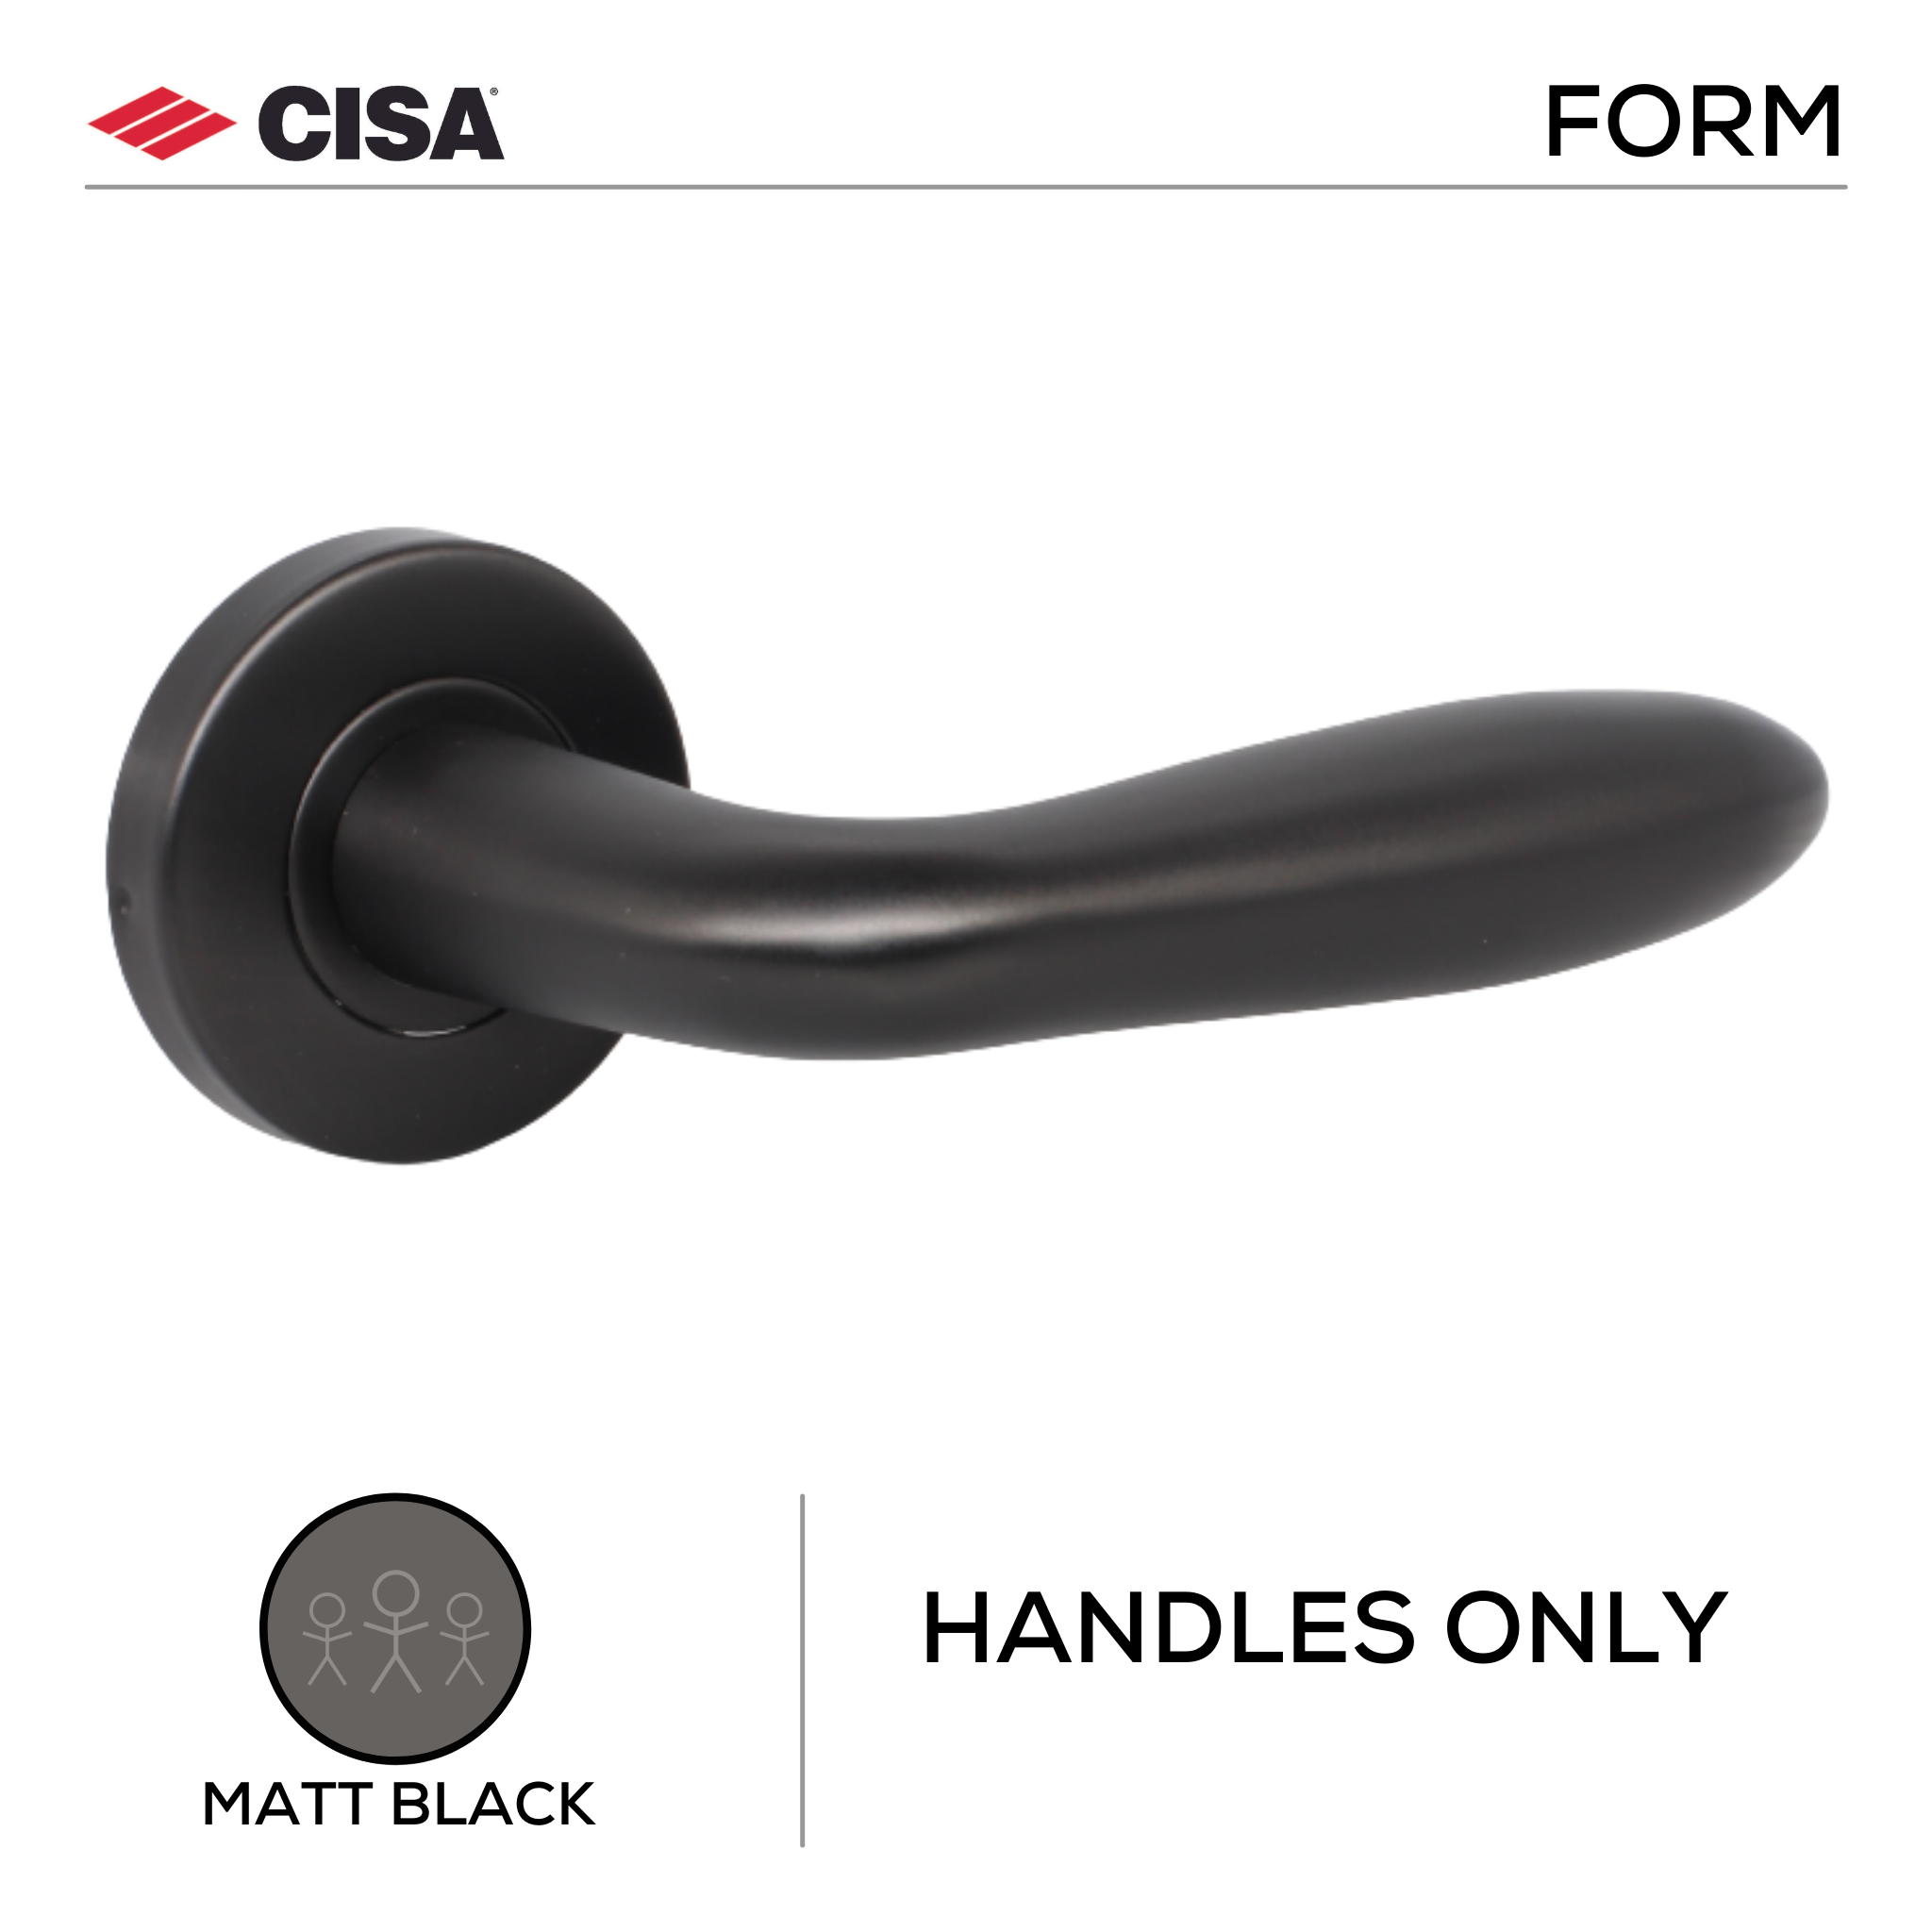 FS112.R.MBL, Lever Handles, Form, On Round Rose, Handles Only, Matt Black, CISA